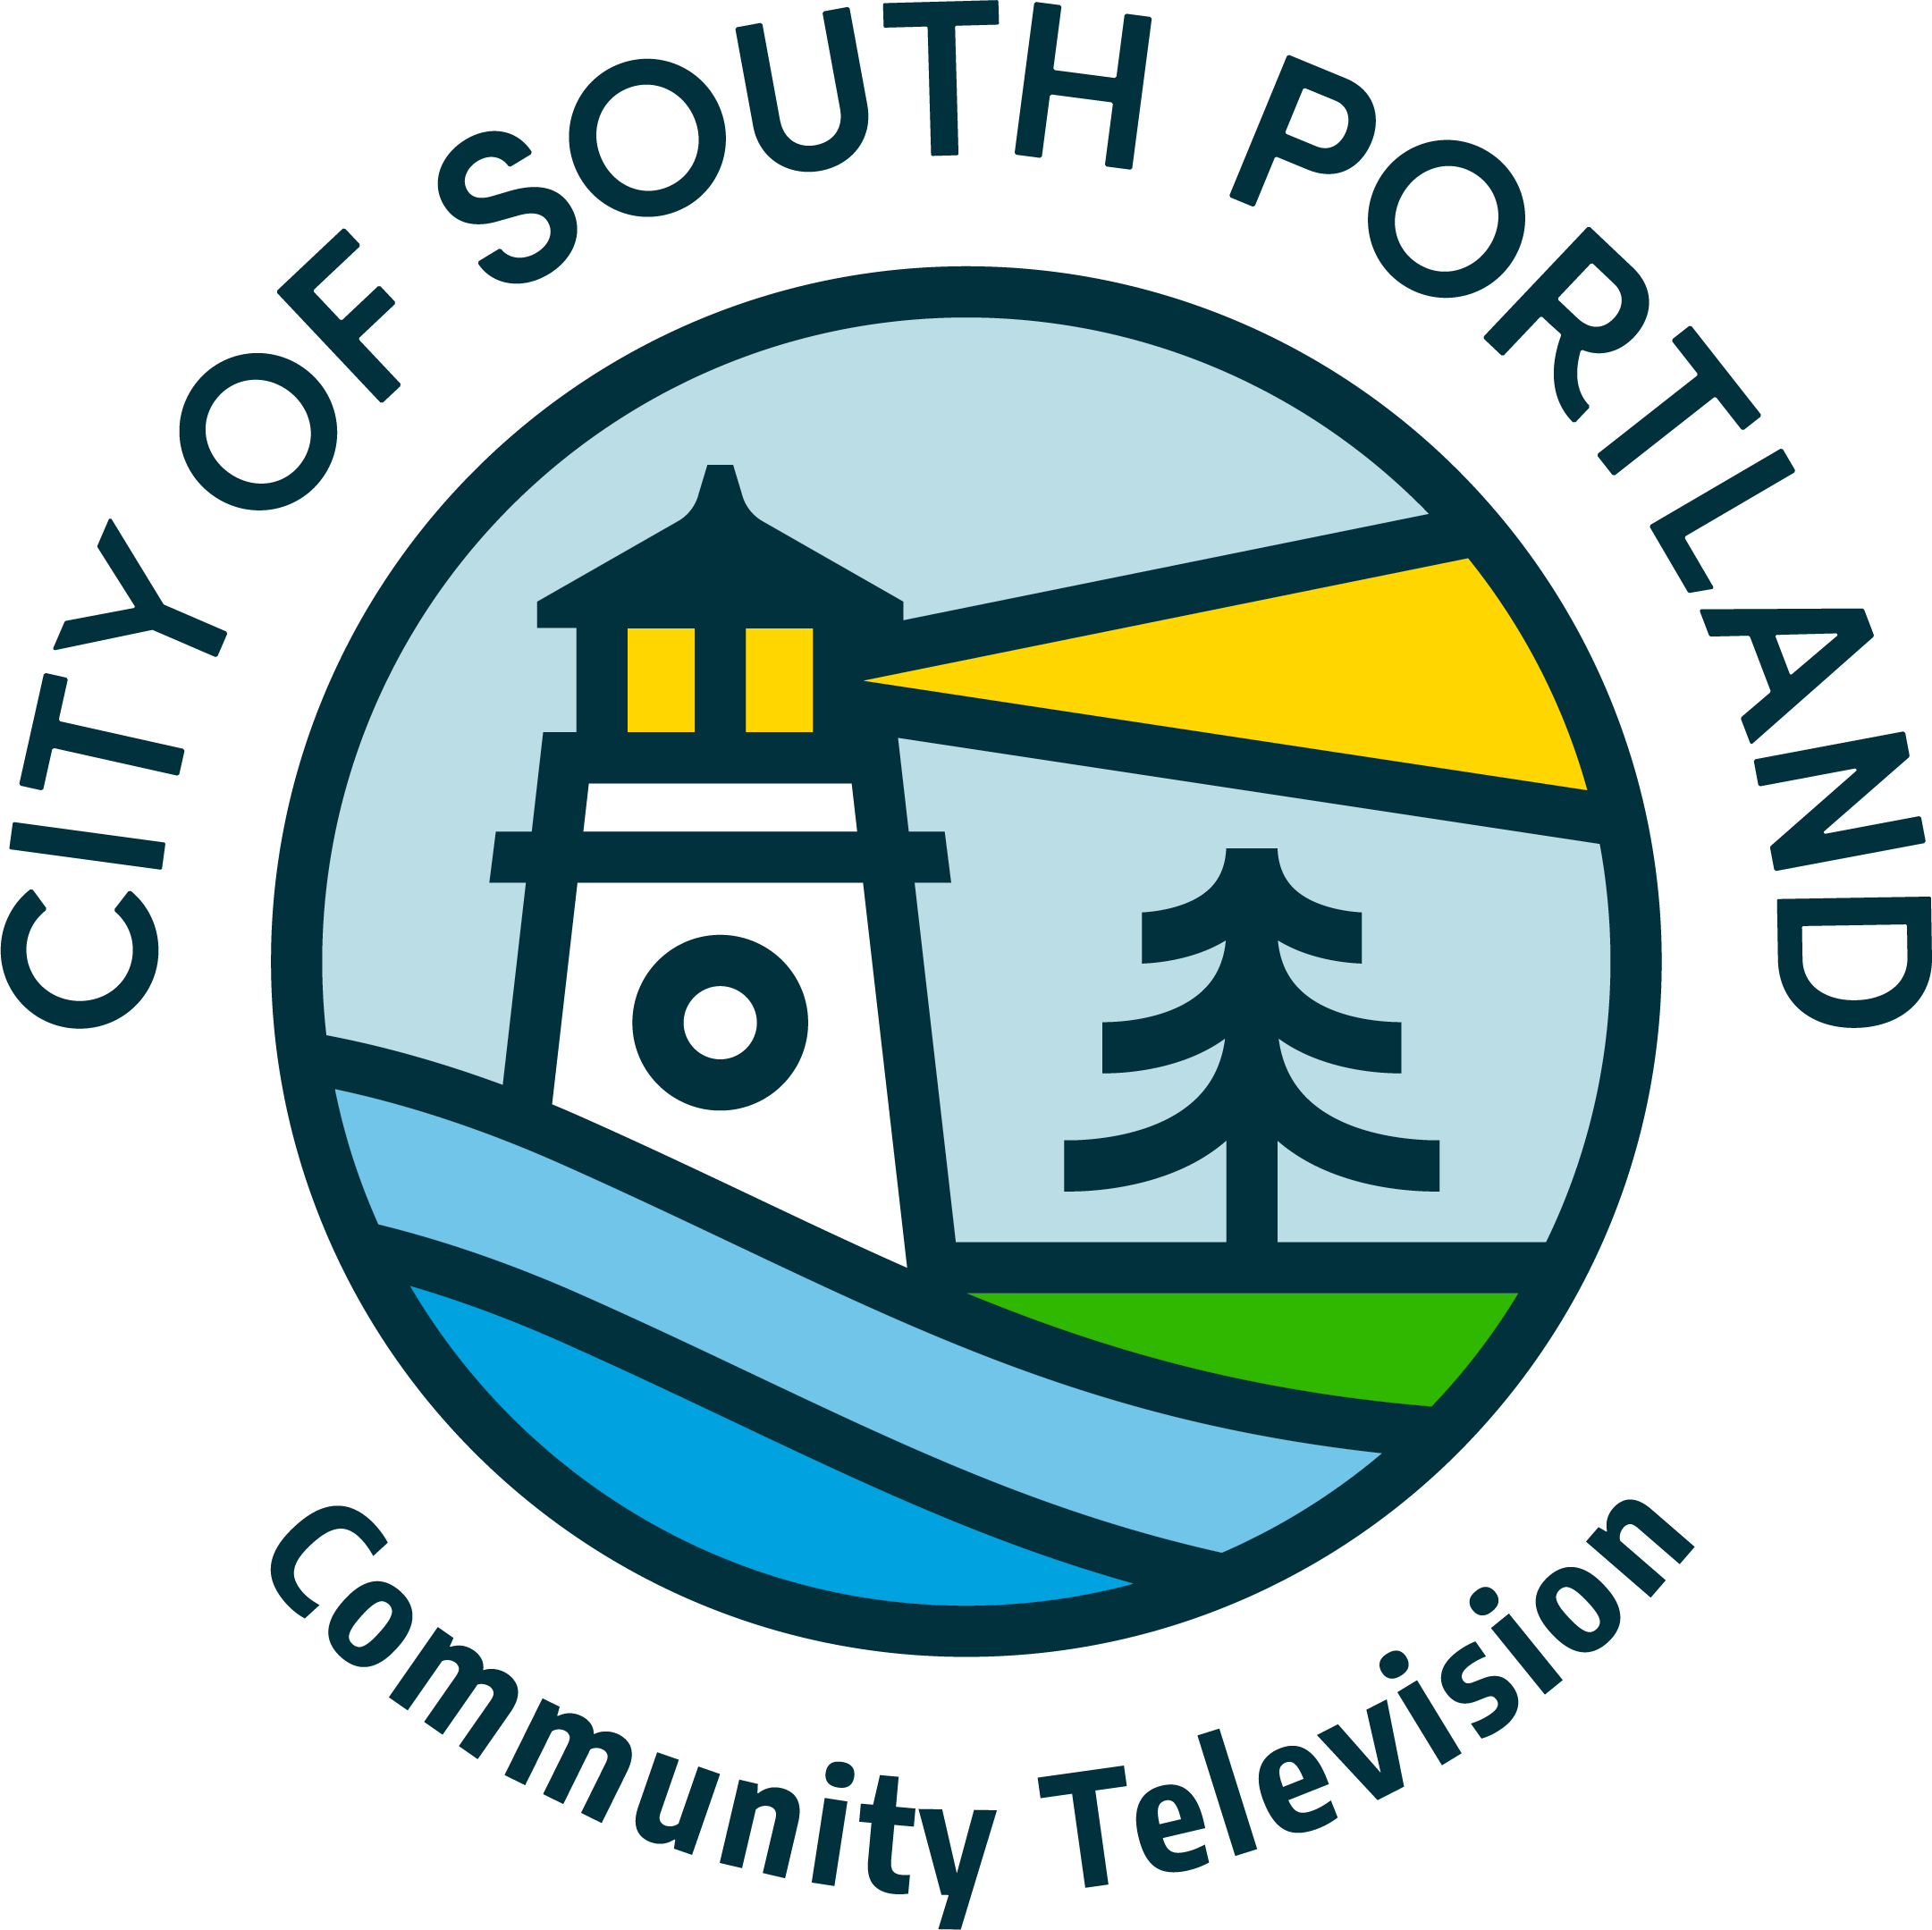 South Portland Community TV - South Portland VOD Player - organization logo